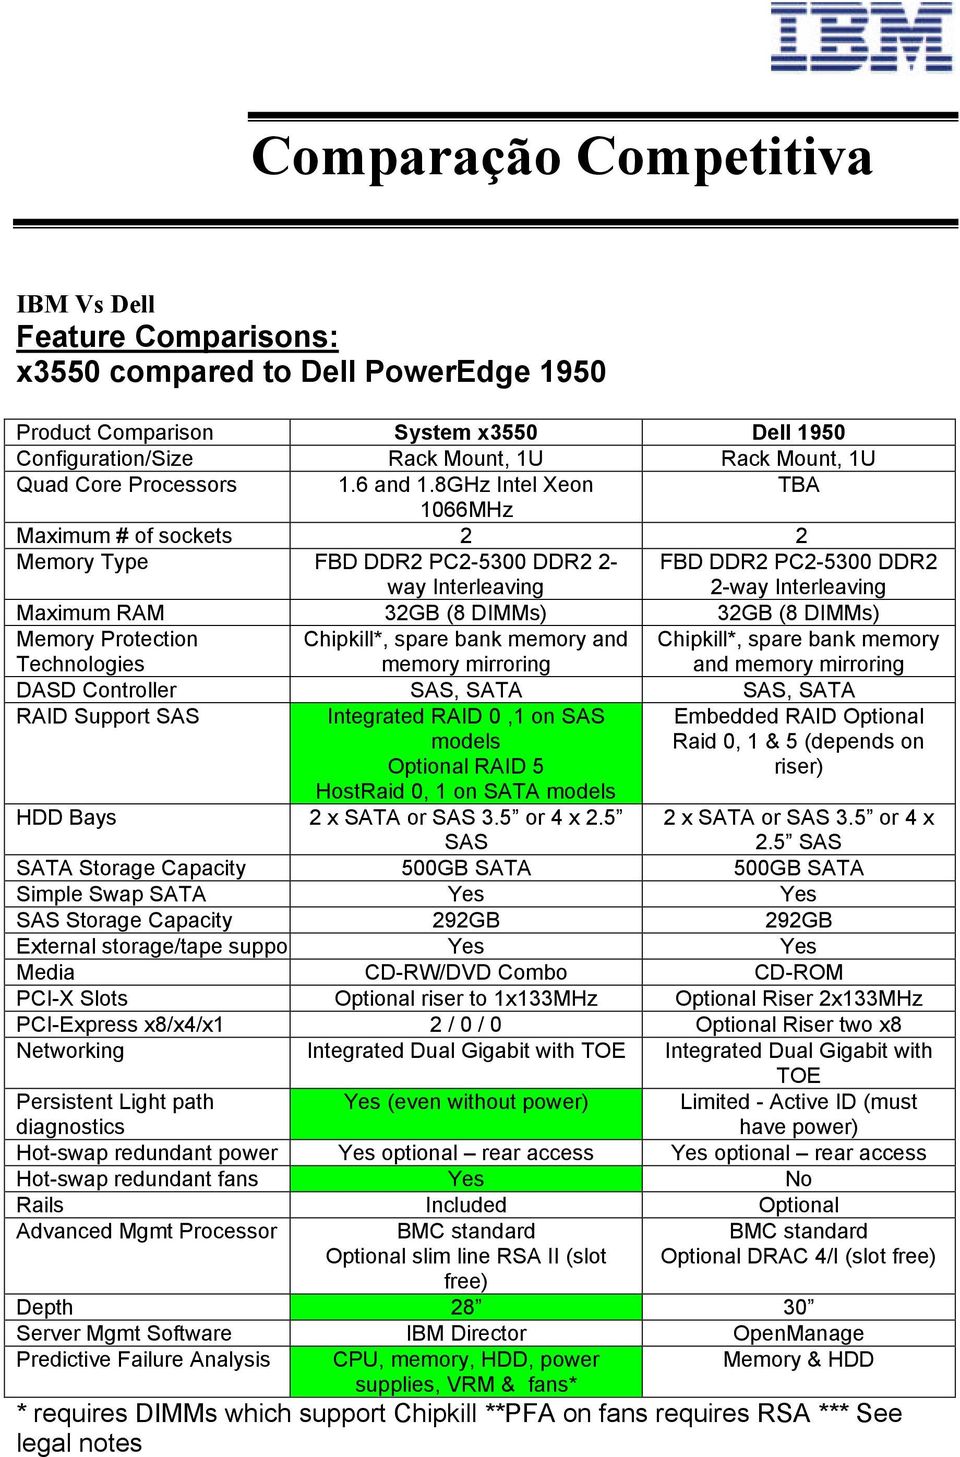 8GHz Intel Xeon TBA 1066MHz Maximum # of sockets 2 2 Memory Type FBD DDR2 PC2-5300 DDR2 2- way Interleaving FBD DDR2 PC2-5300 DDR2 2-way Interleaving Maximum RAM 32GB (8 DIMMs) 32GB (8 DIMMs) Memory